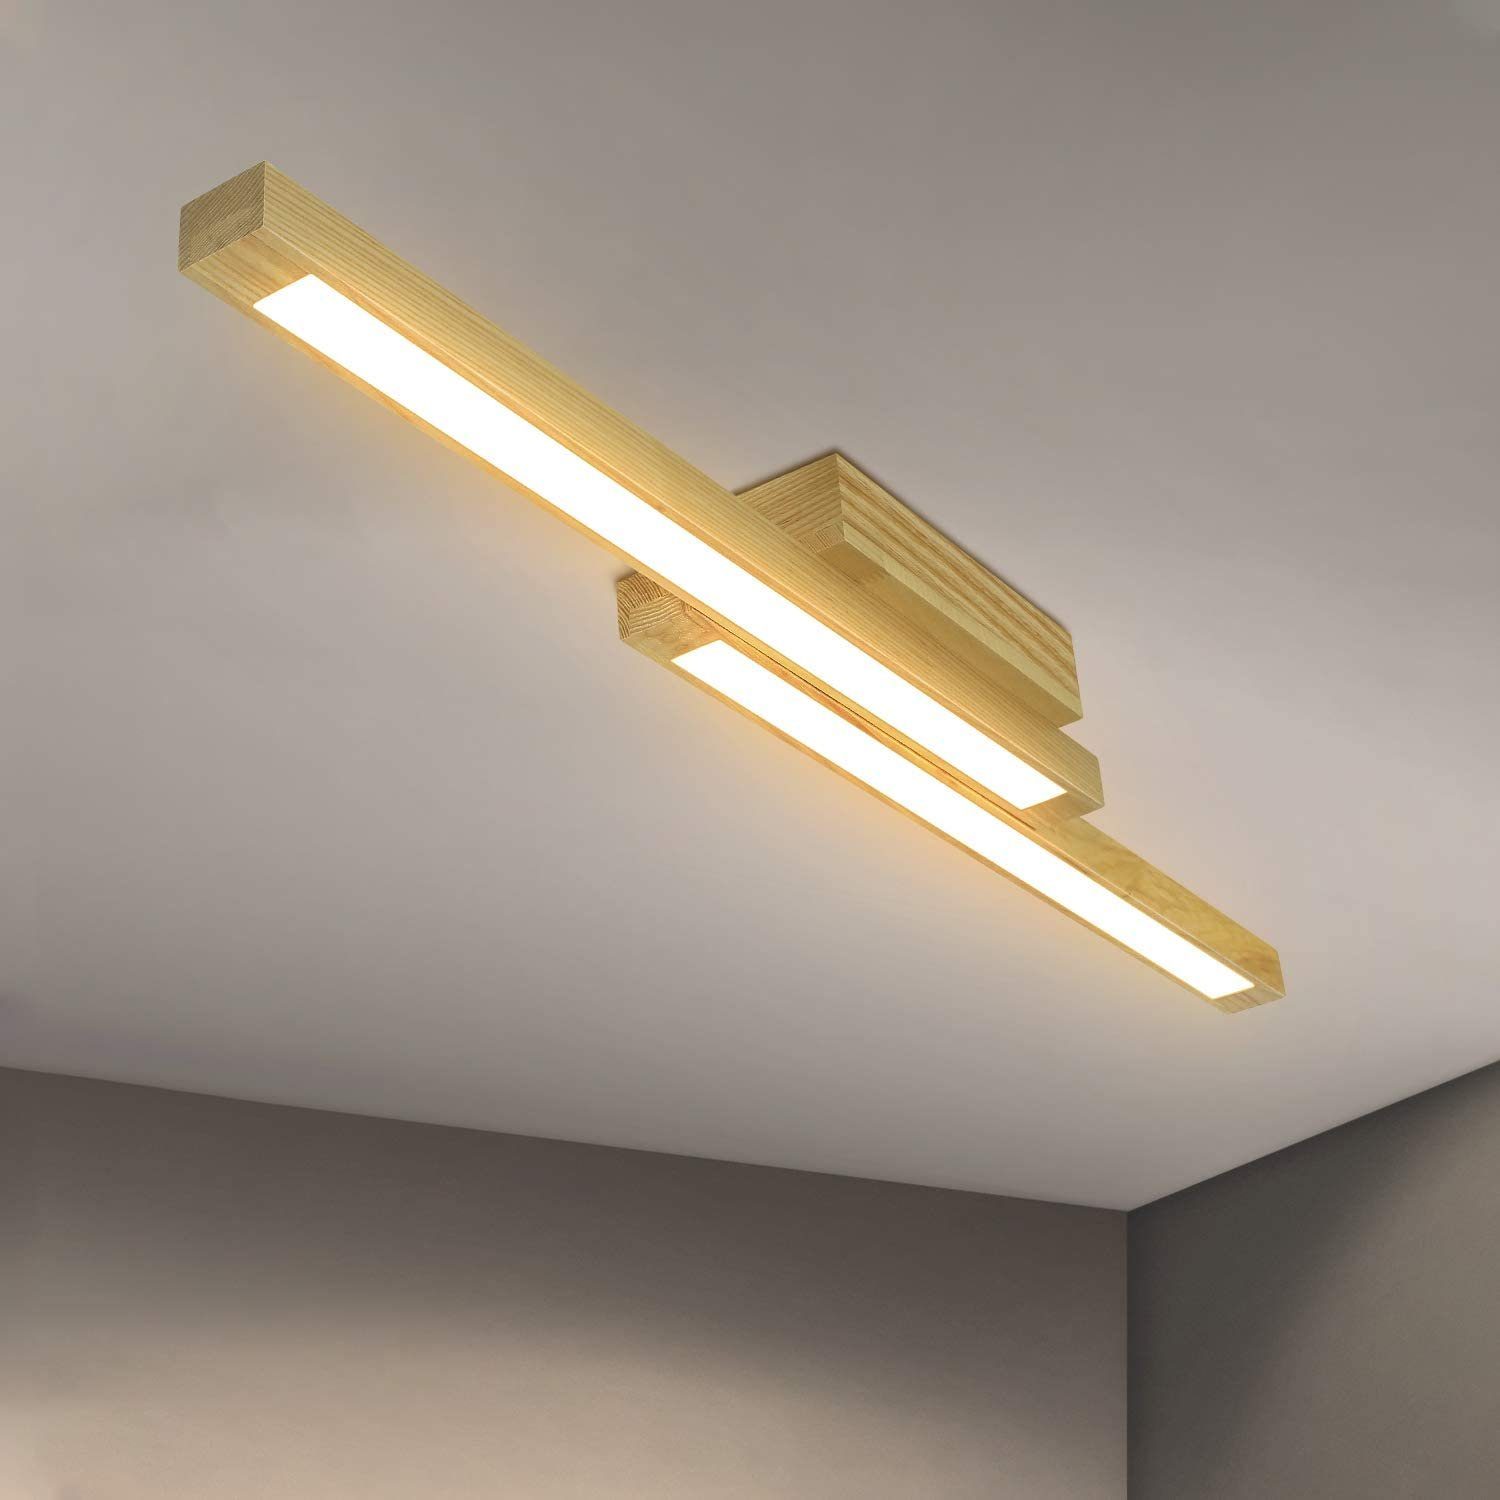 ZMH LED Deckenleuchte »3000K Warmweiß Holz Wohnzimmerlampe 114cm Lang LED«,  LED fest integriert, Warmweiß